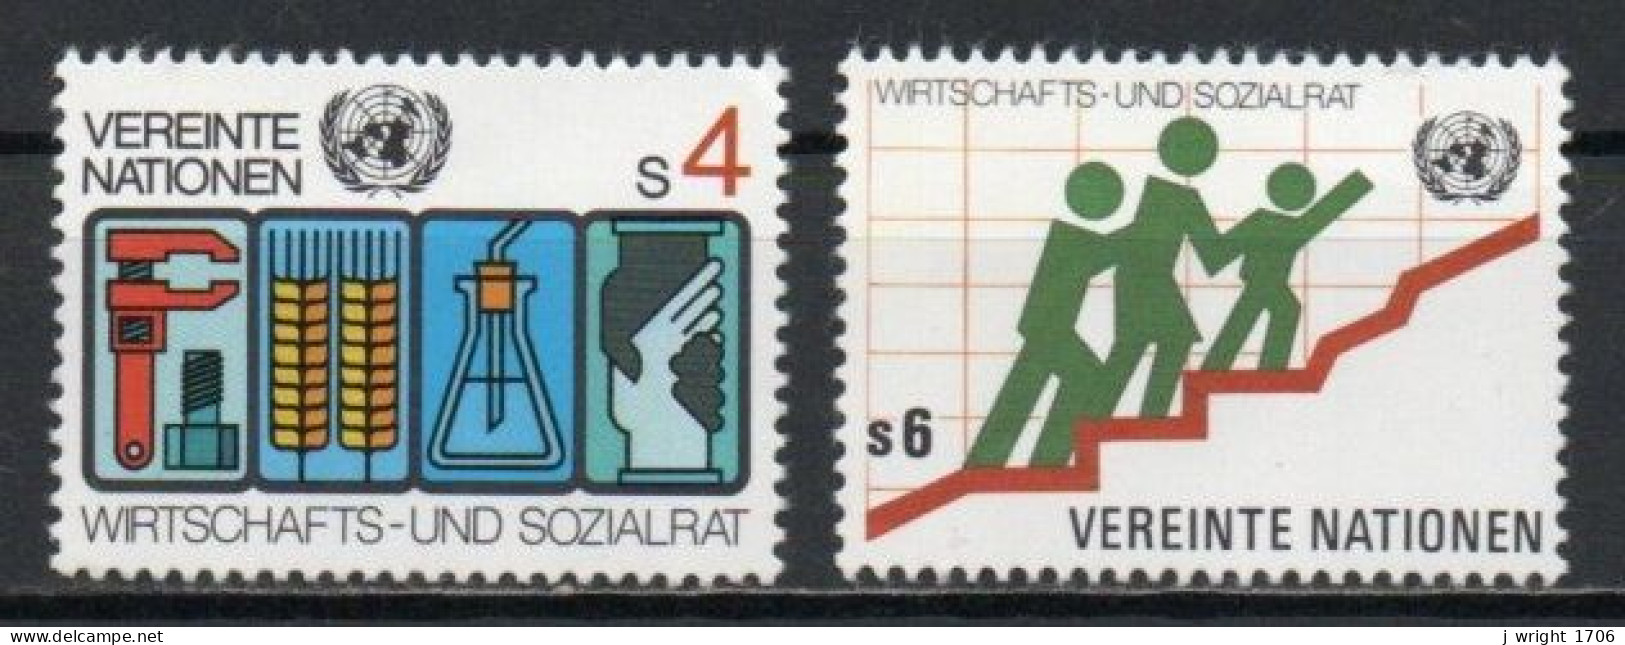 UN/Vienna, 1980, Economic & Social Council, Set, MNH - Nuovi